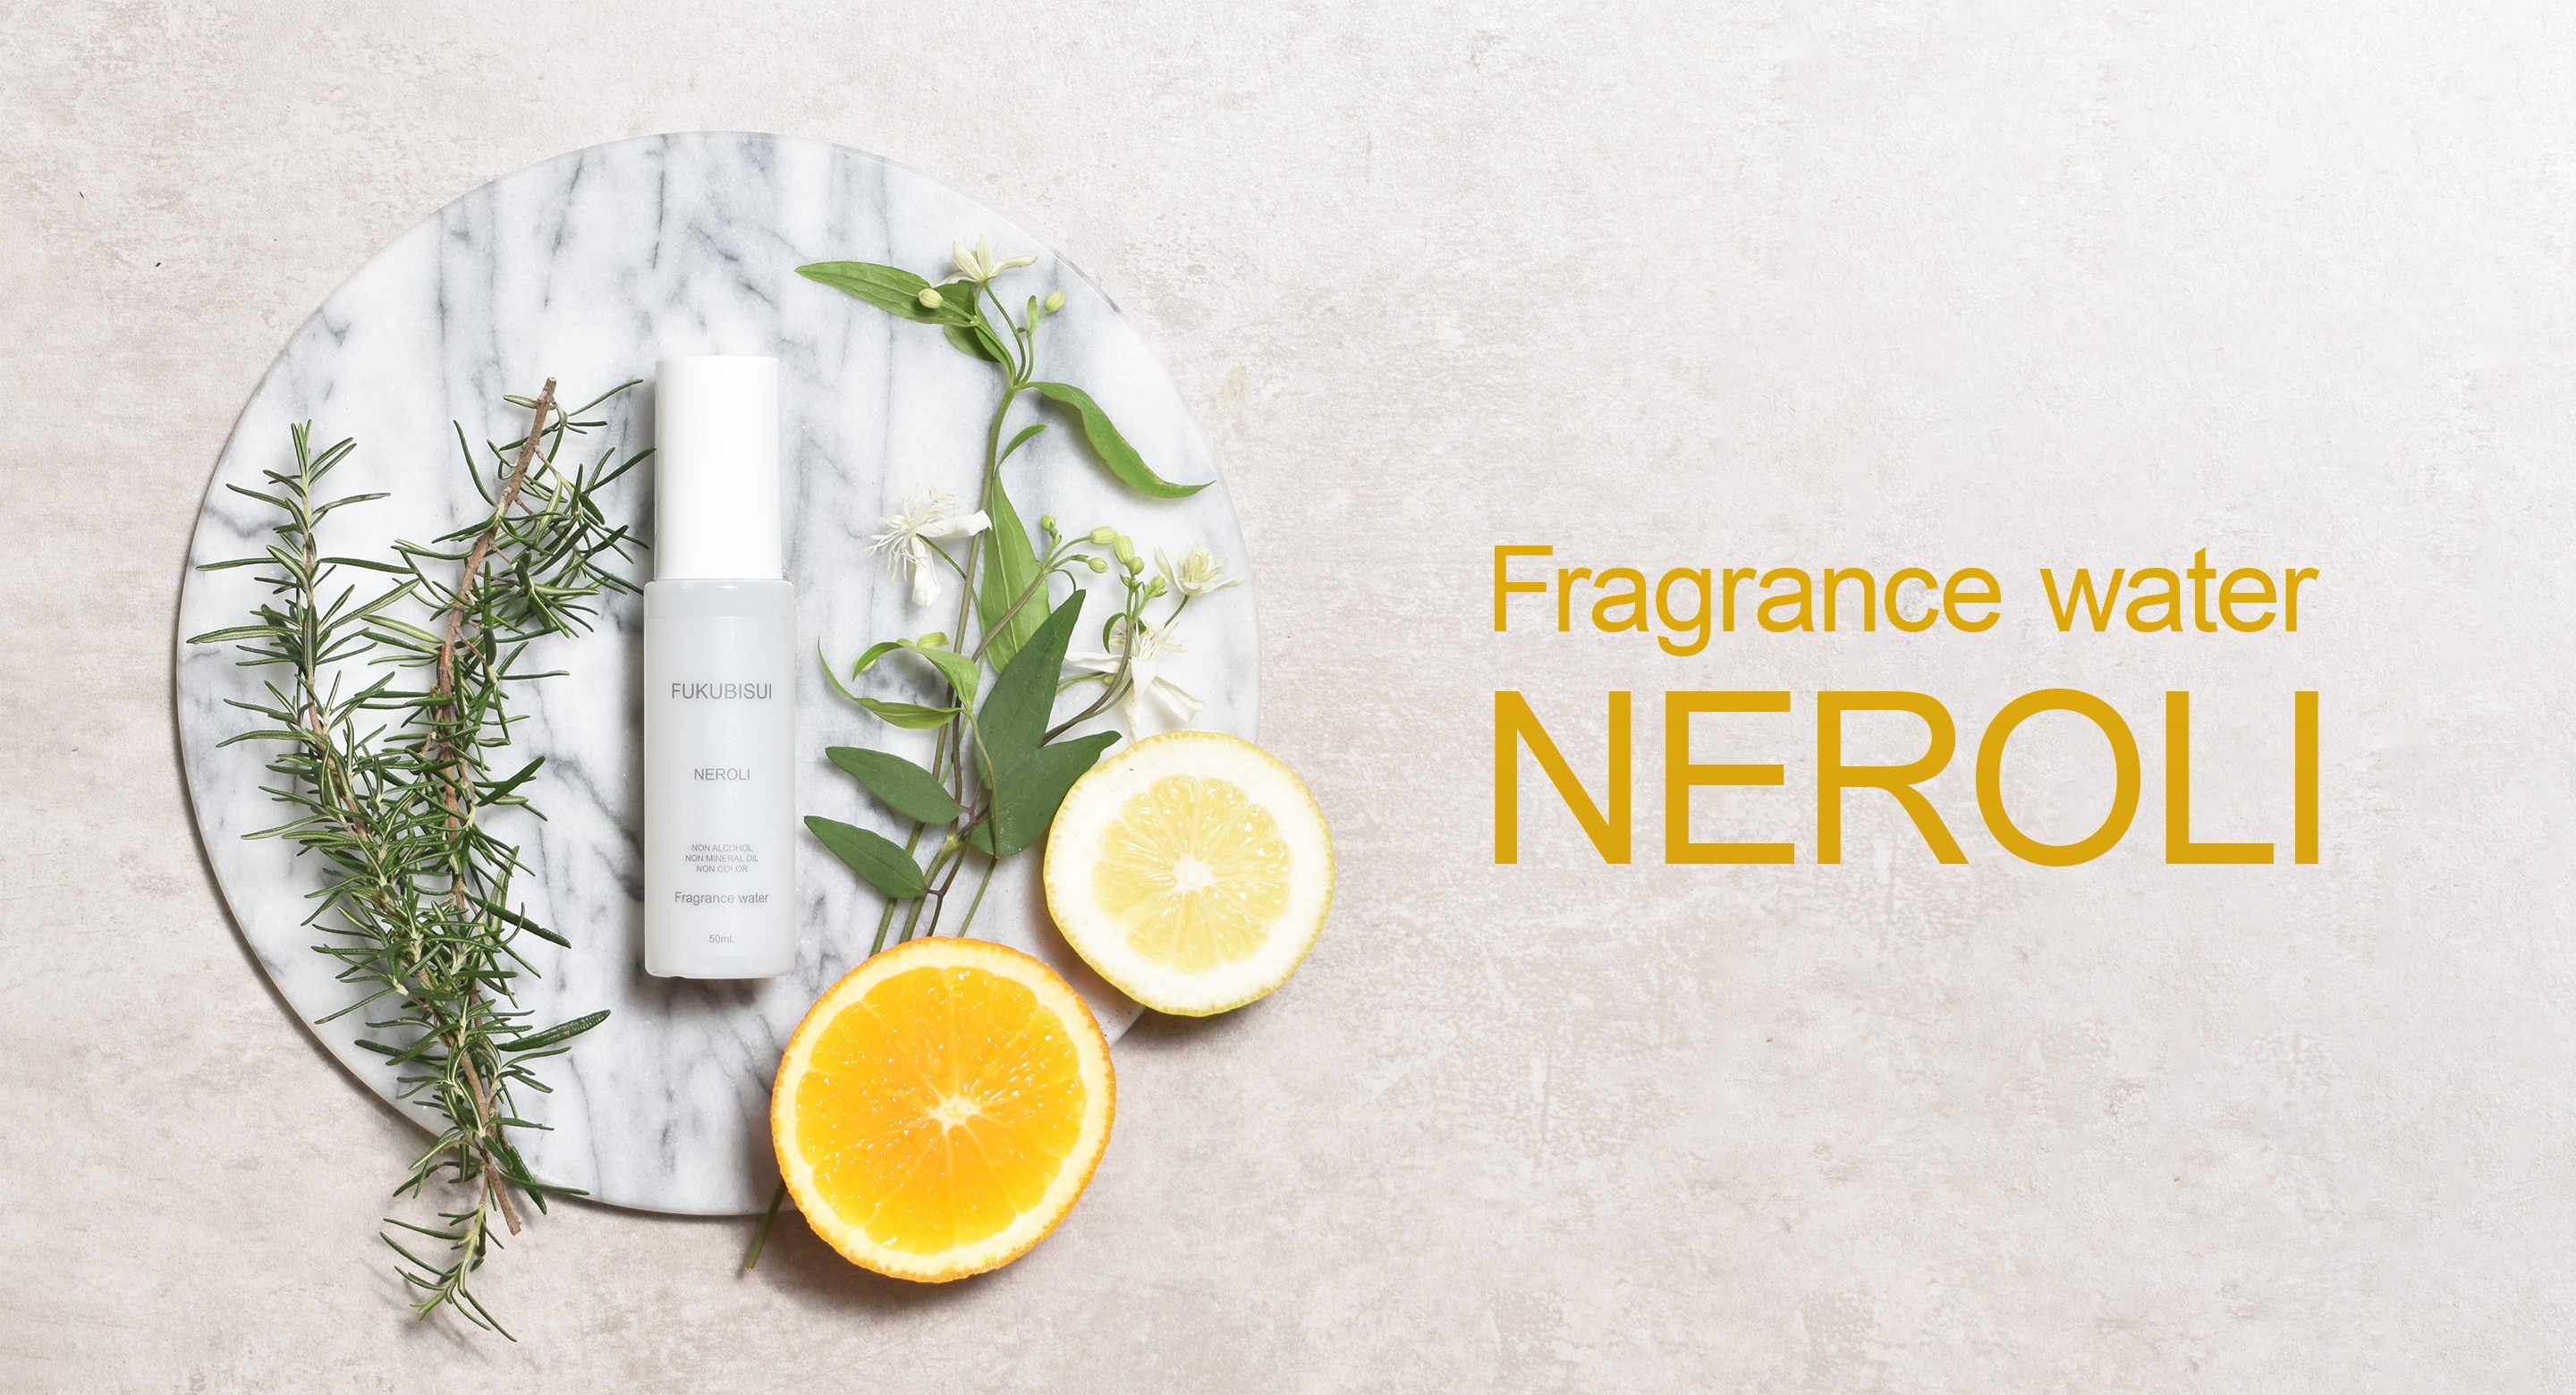 FUKUBISUI Fragrance water NEROLI